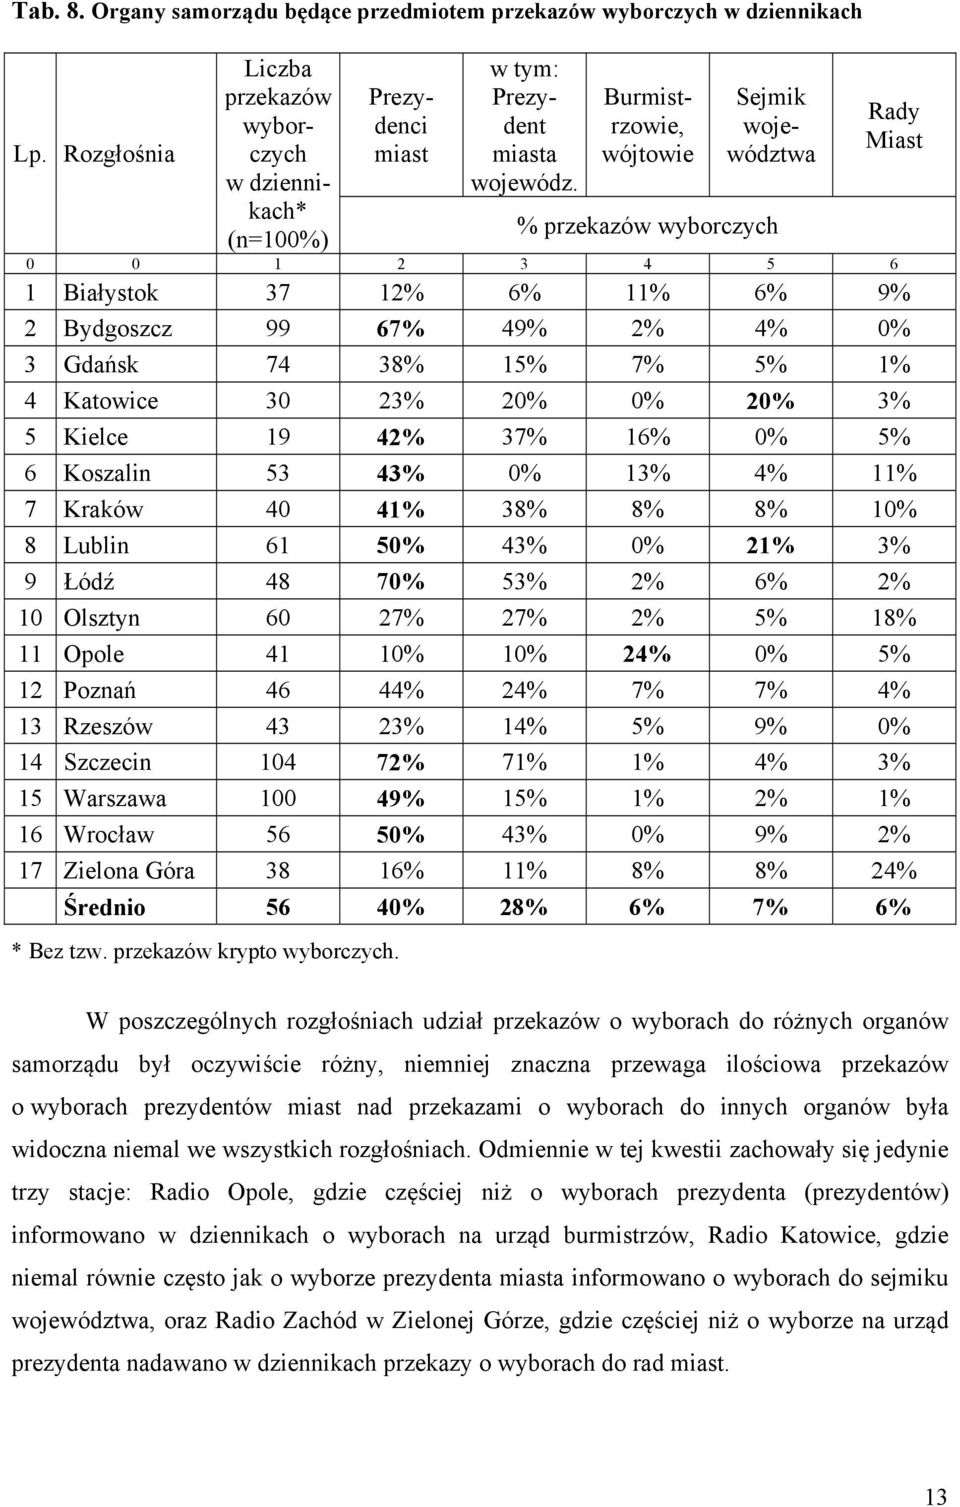 2% 4% 0% 3 Gdańsk 74 38% 15% 7% 5% 1% 4 Katowice 30 23% 20% 0% 20% 3% 5 Kielce 19 42% 37% 16% 0% 5% 6 Koszalin 53 43% 0% 13% 4% 11% 7 Kraków 40 41% 38% 8% 8% 10% 8 Lublin 61 50% 43% 0% 21% 3% 9 Łódź